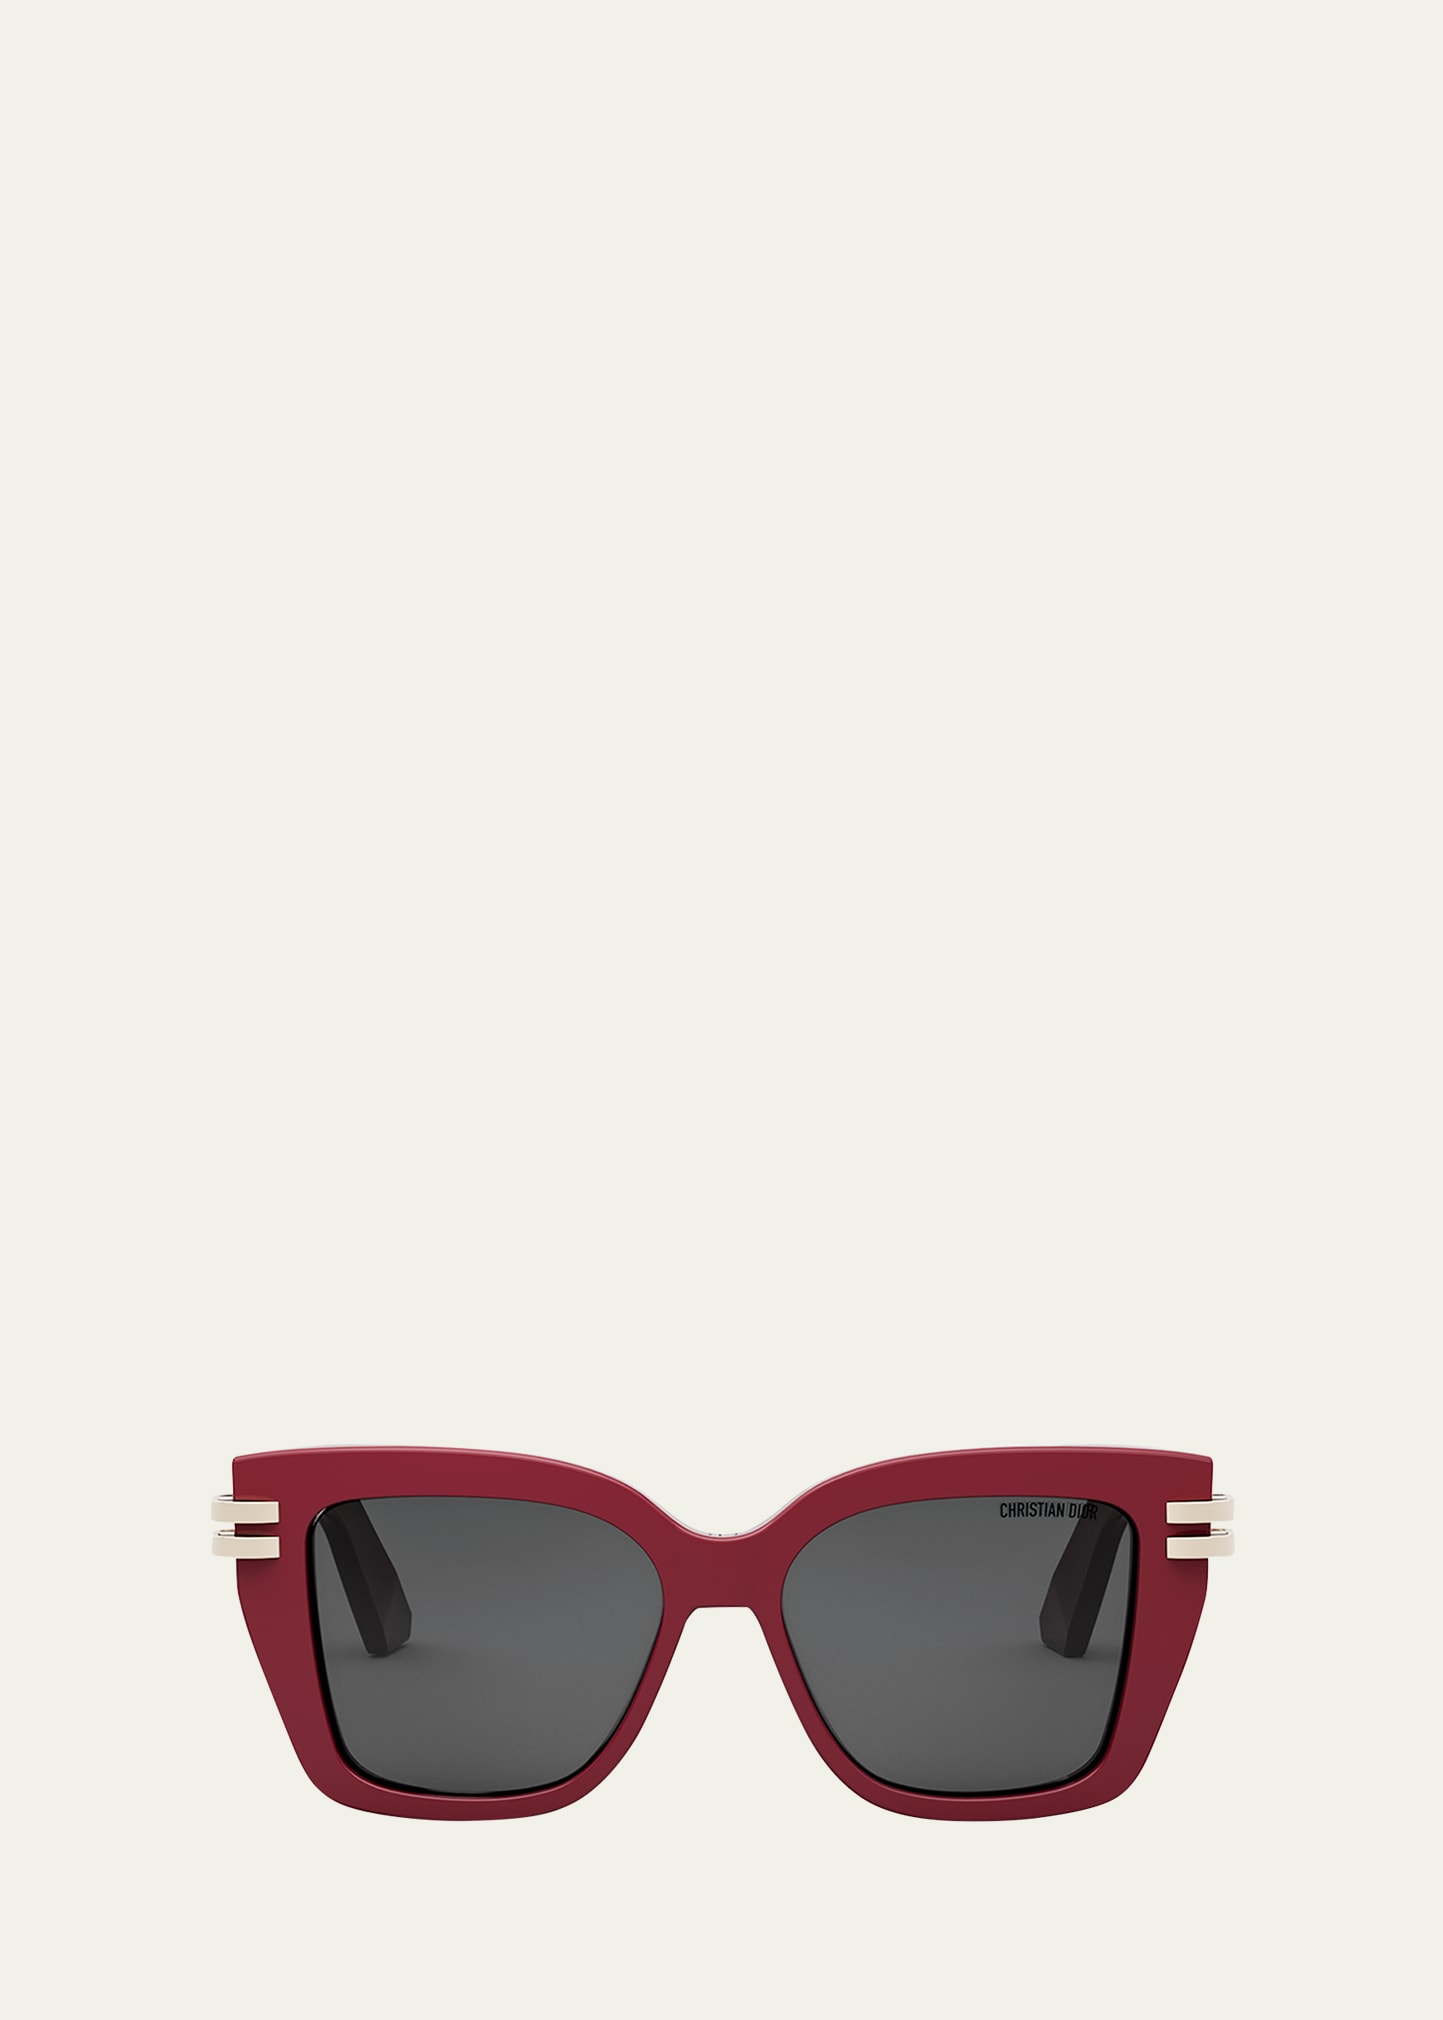 CDior S1I Sunglasses